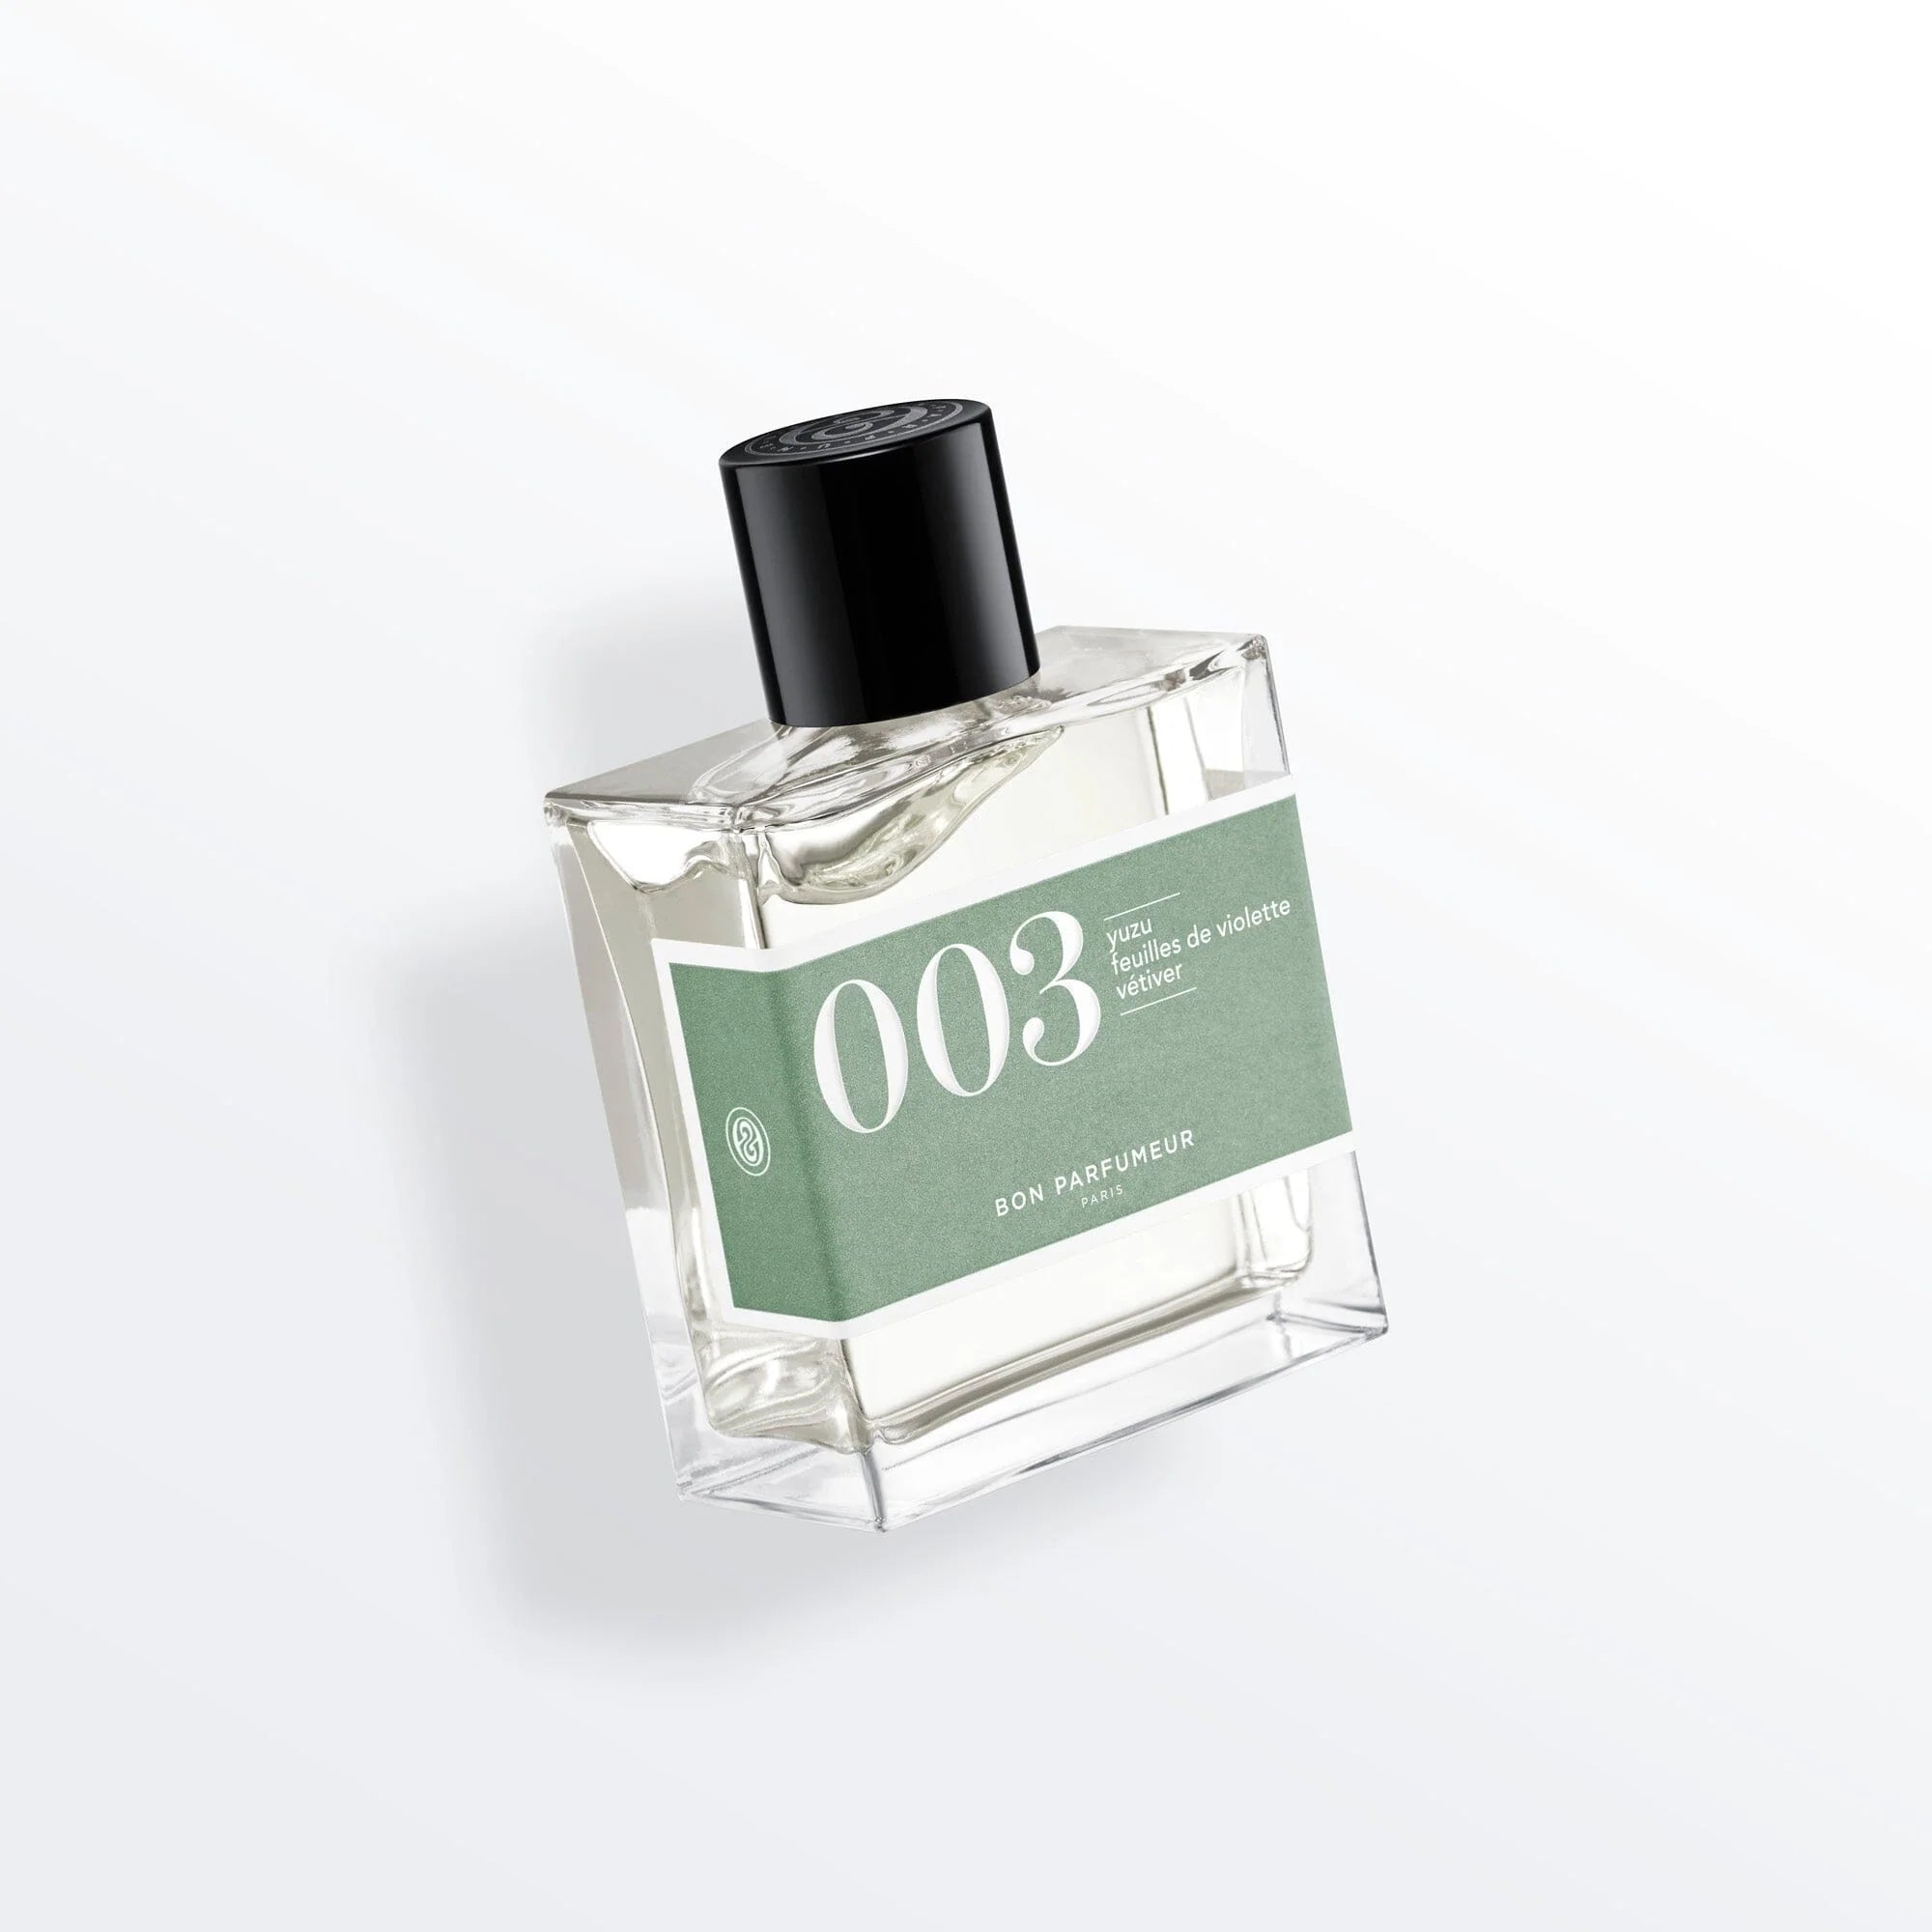 Perfume - Bon Parfumeur - 003